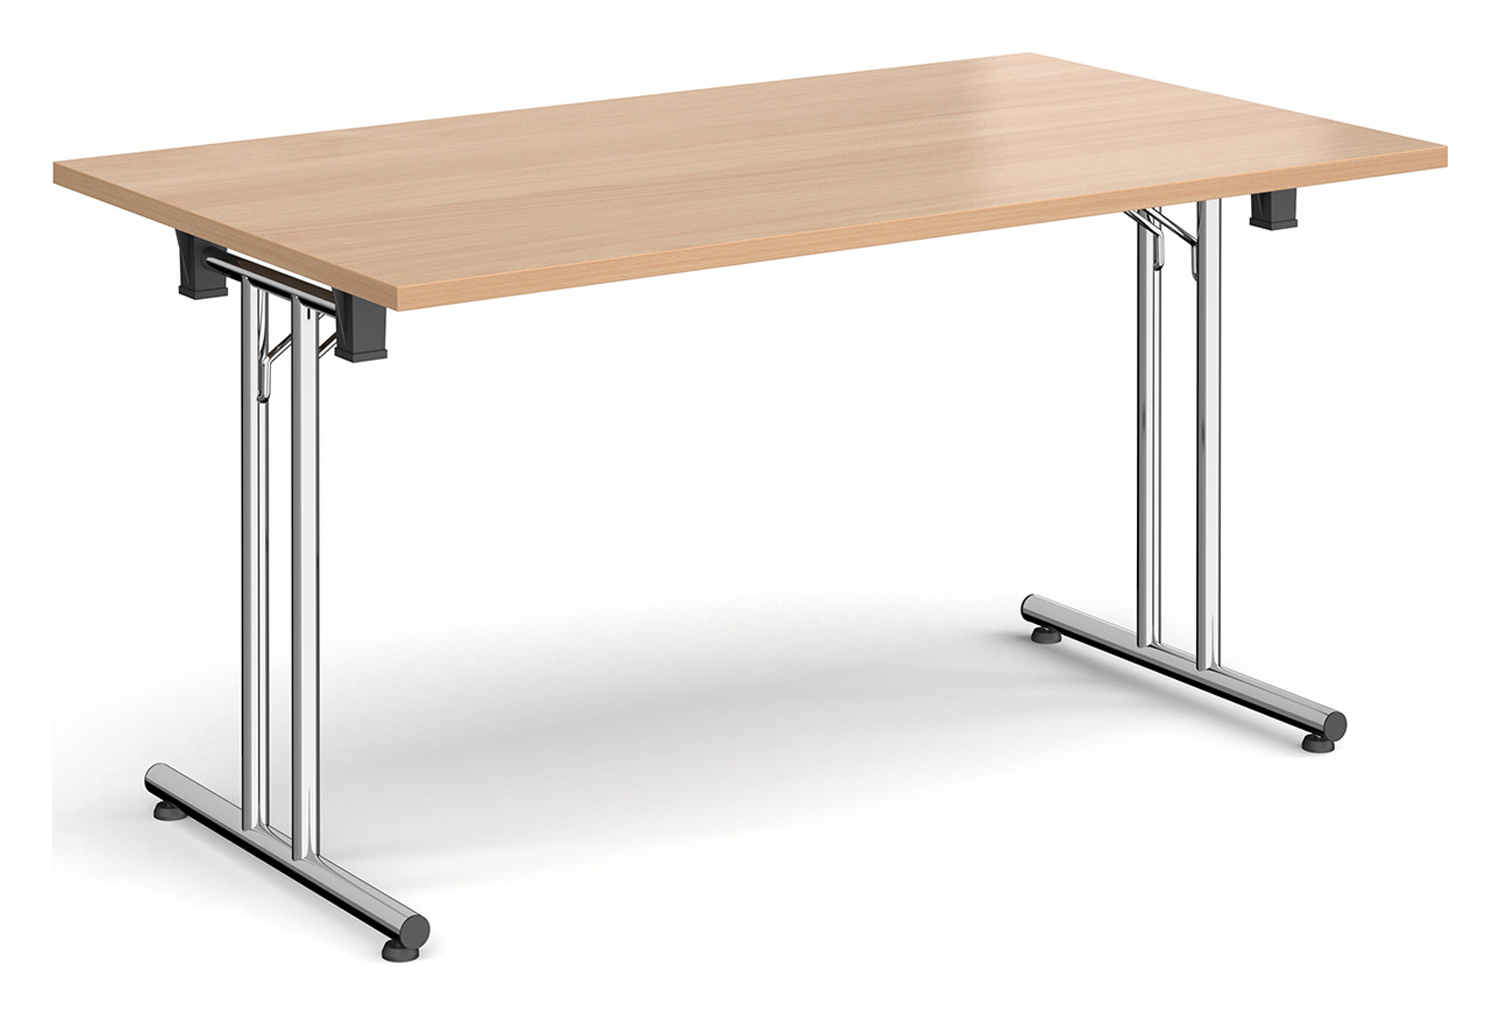 Durand Rectangular Folding Table, 140wx80dx73h (cm), Chrome Frame, Beech, Fully Installed